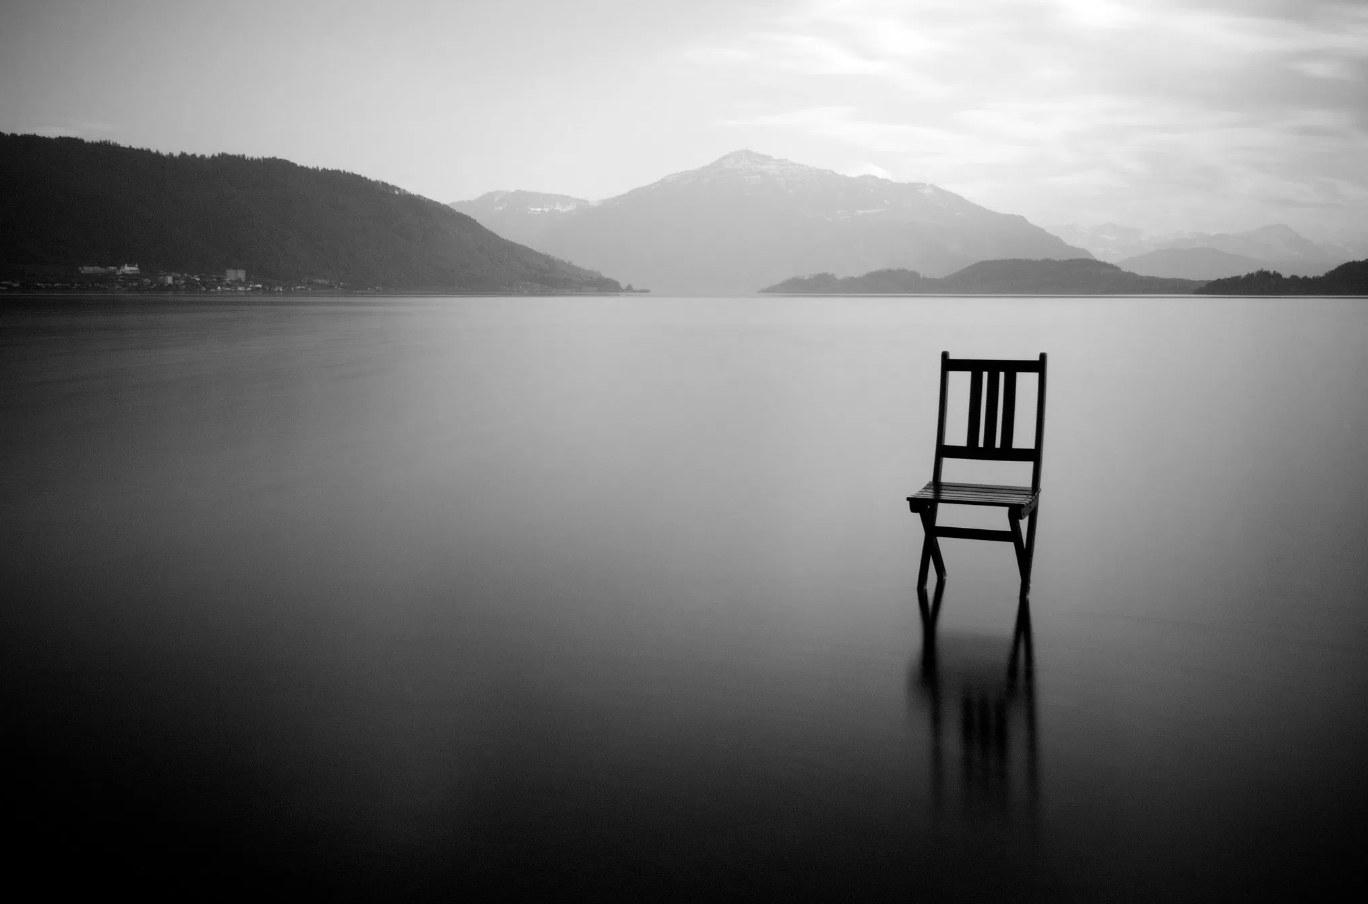 Enjoy the silence - Thomas Leuthard- CC BY